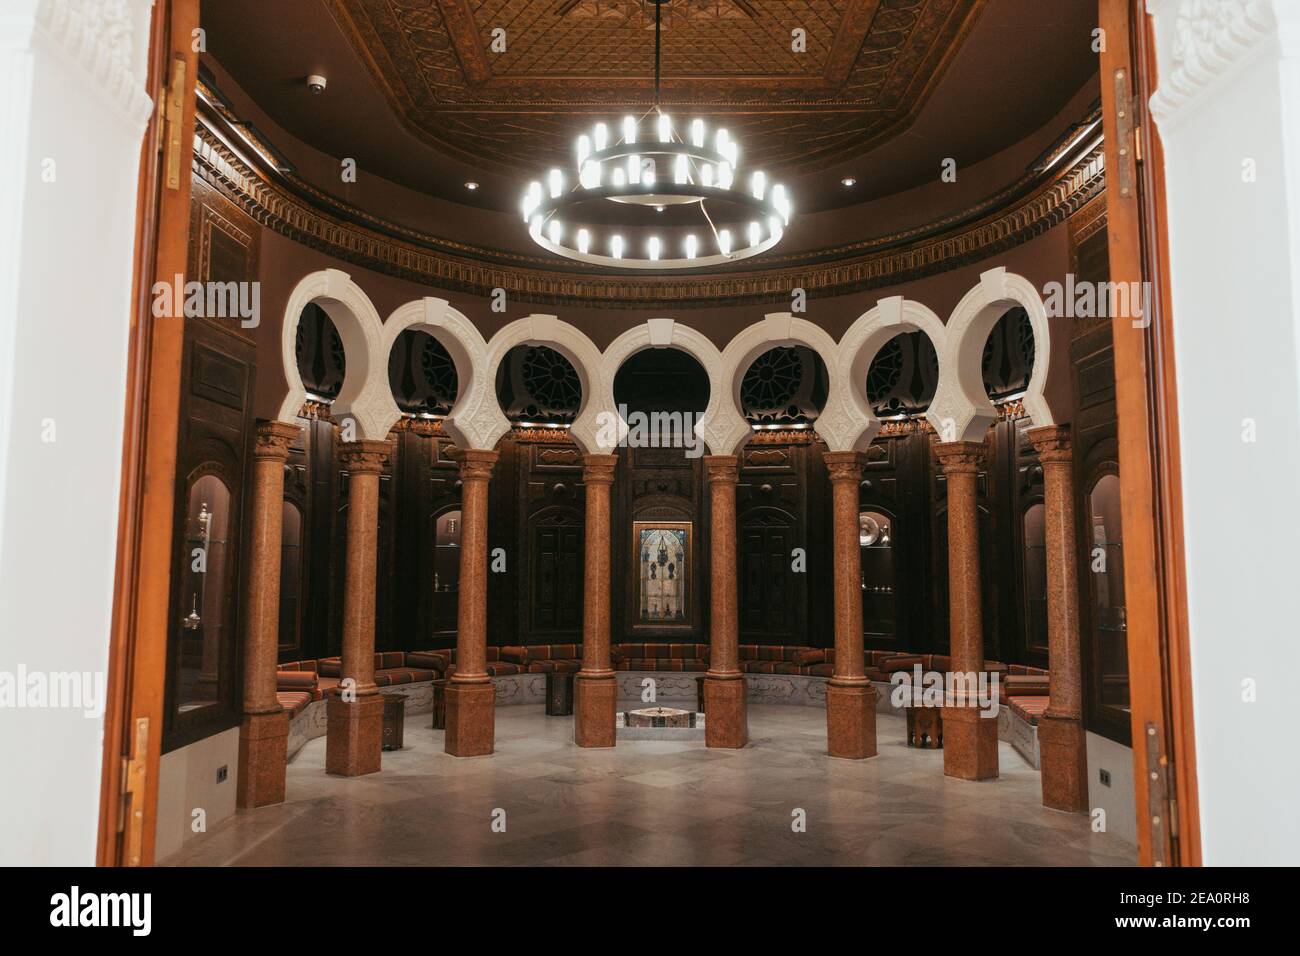 An ornate room with stone pillars inside the Sursock Museum, Beirut, Lebanon Stock Photo